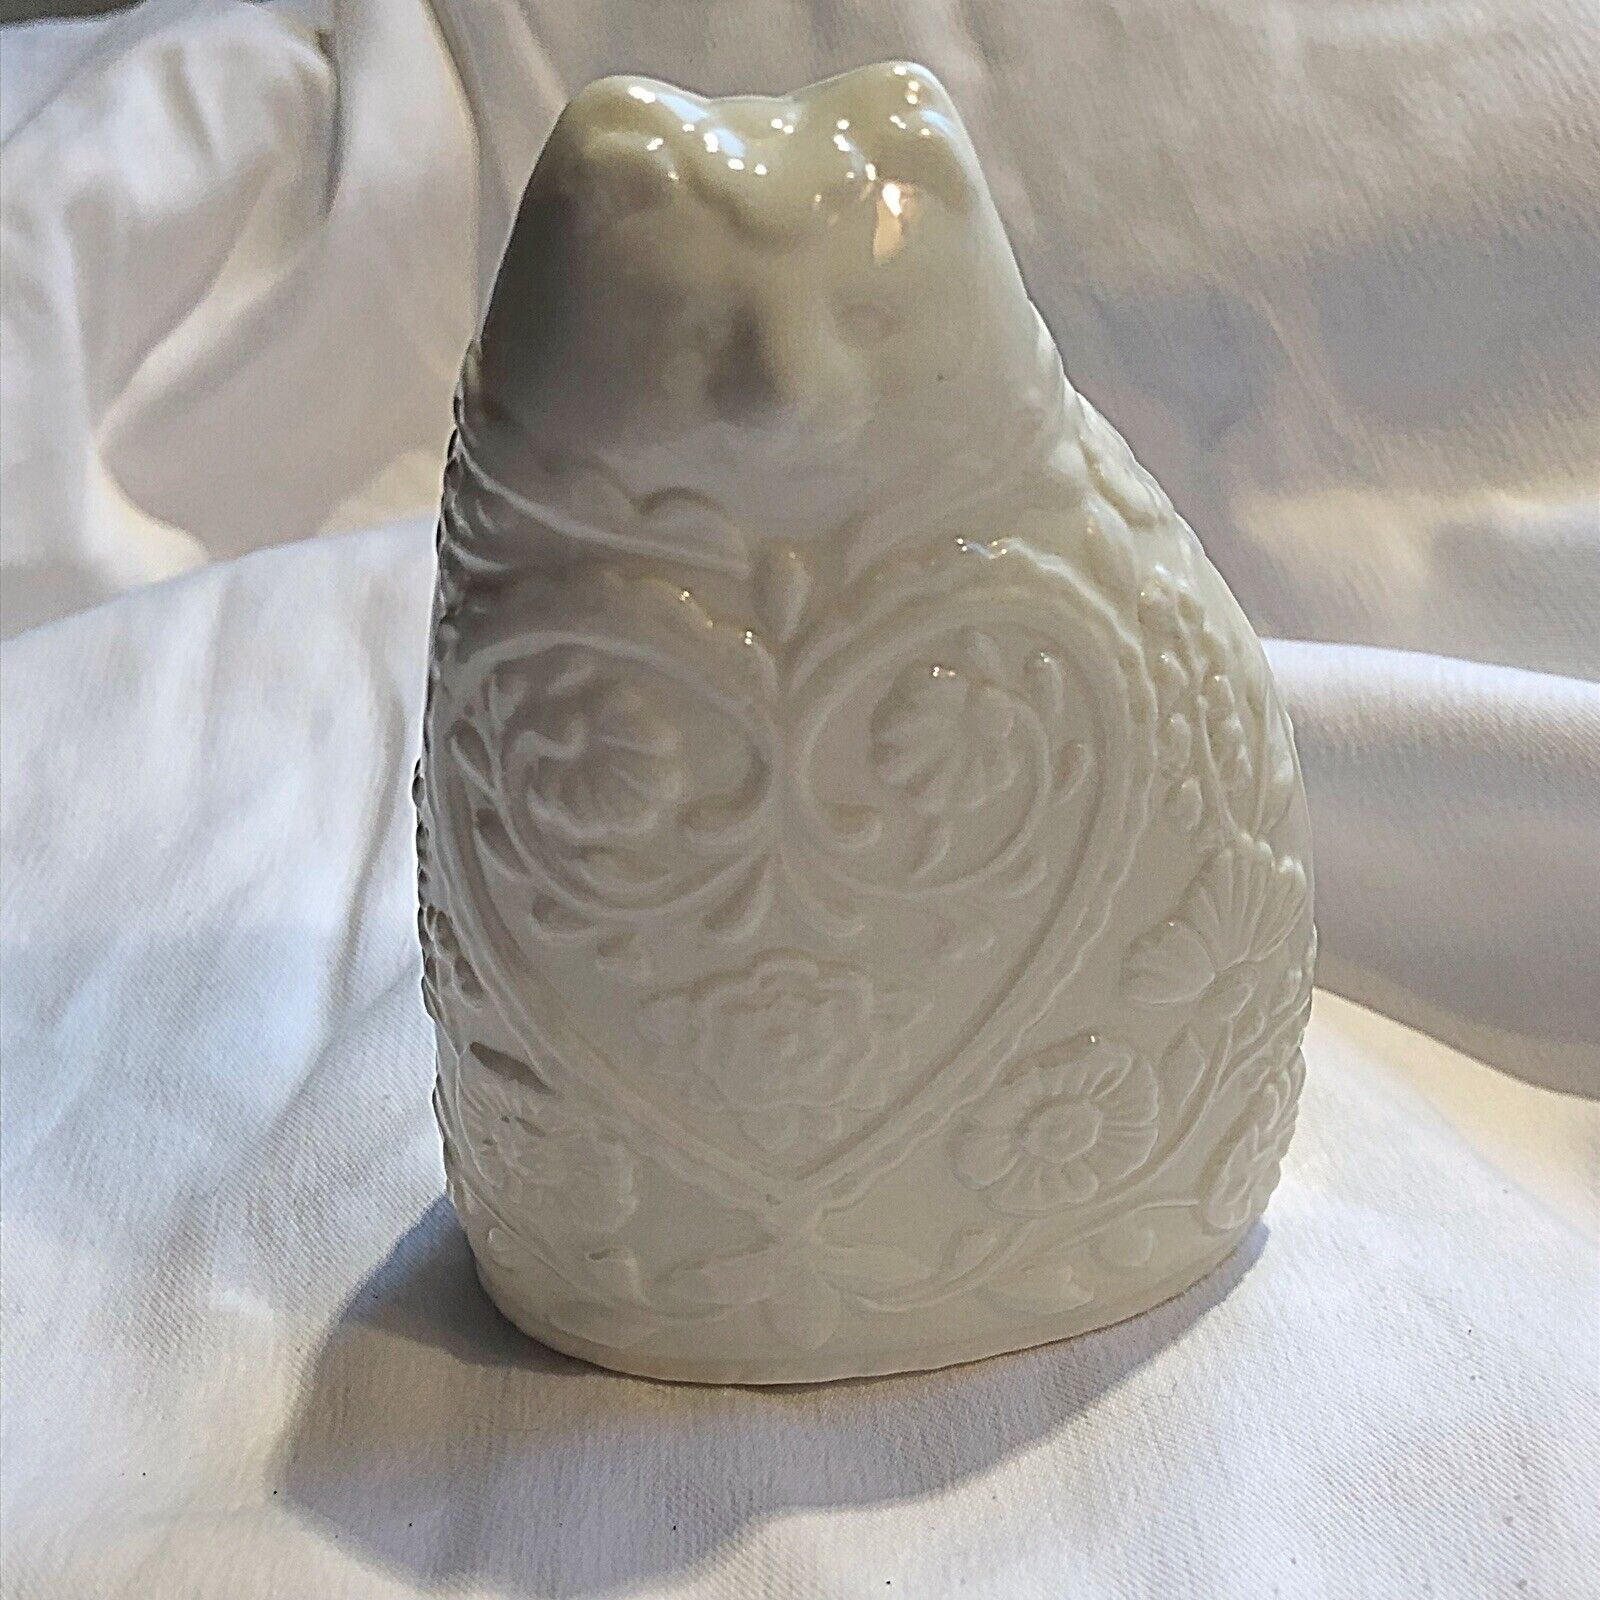 White Ceramic Cat Figurine Hearts And Flowers Filigree Design 3.5”